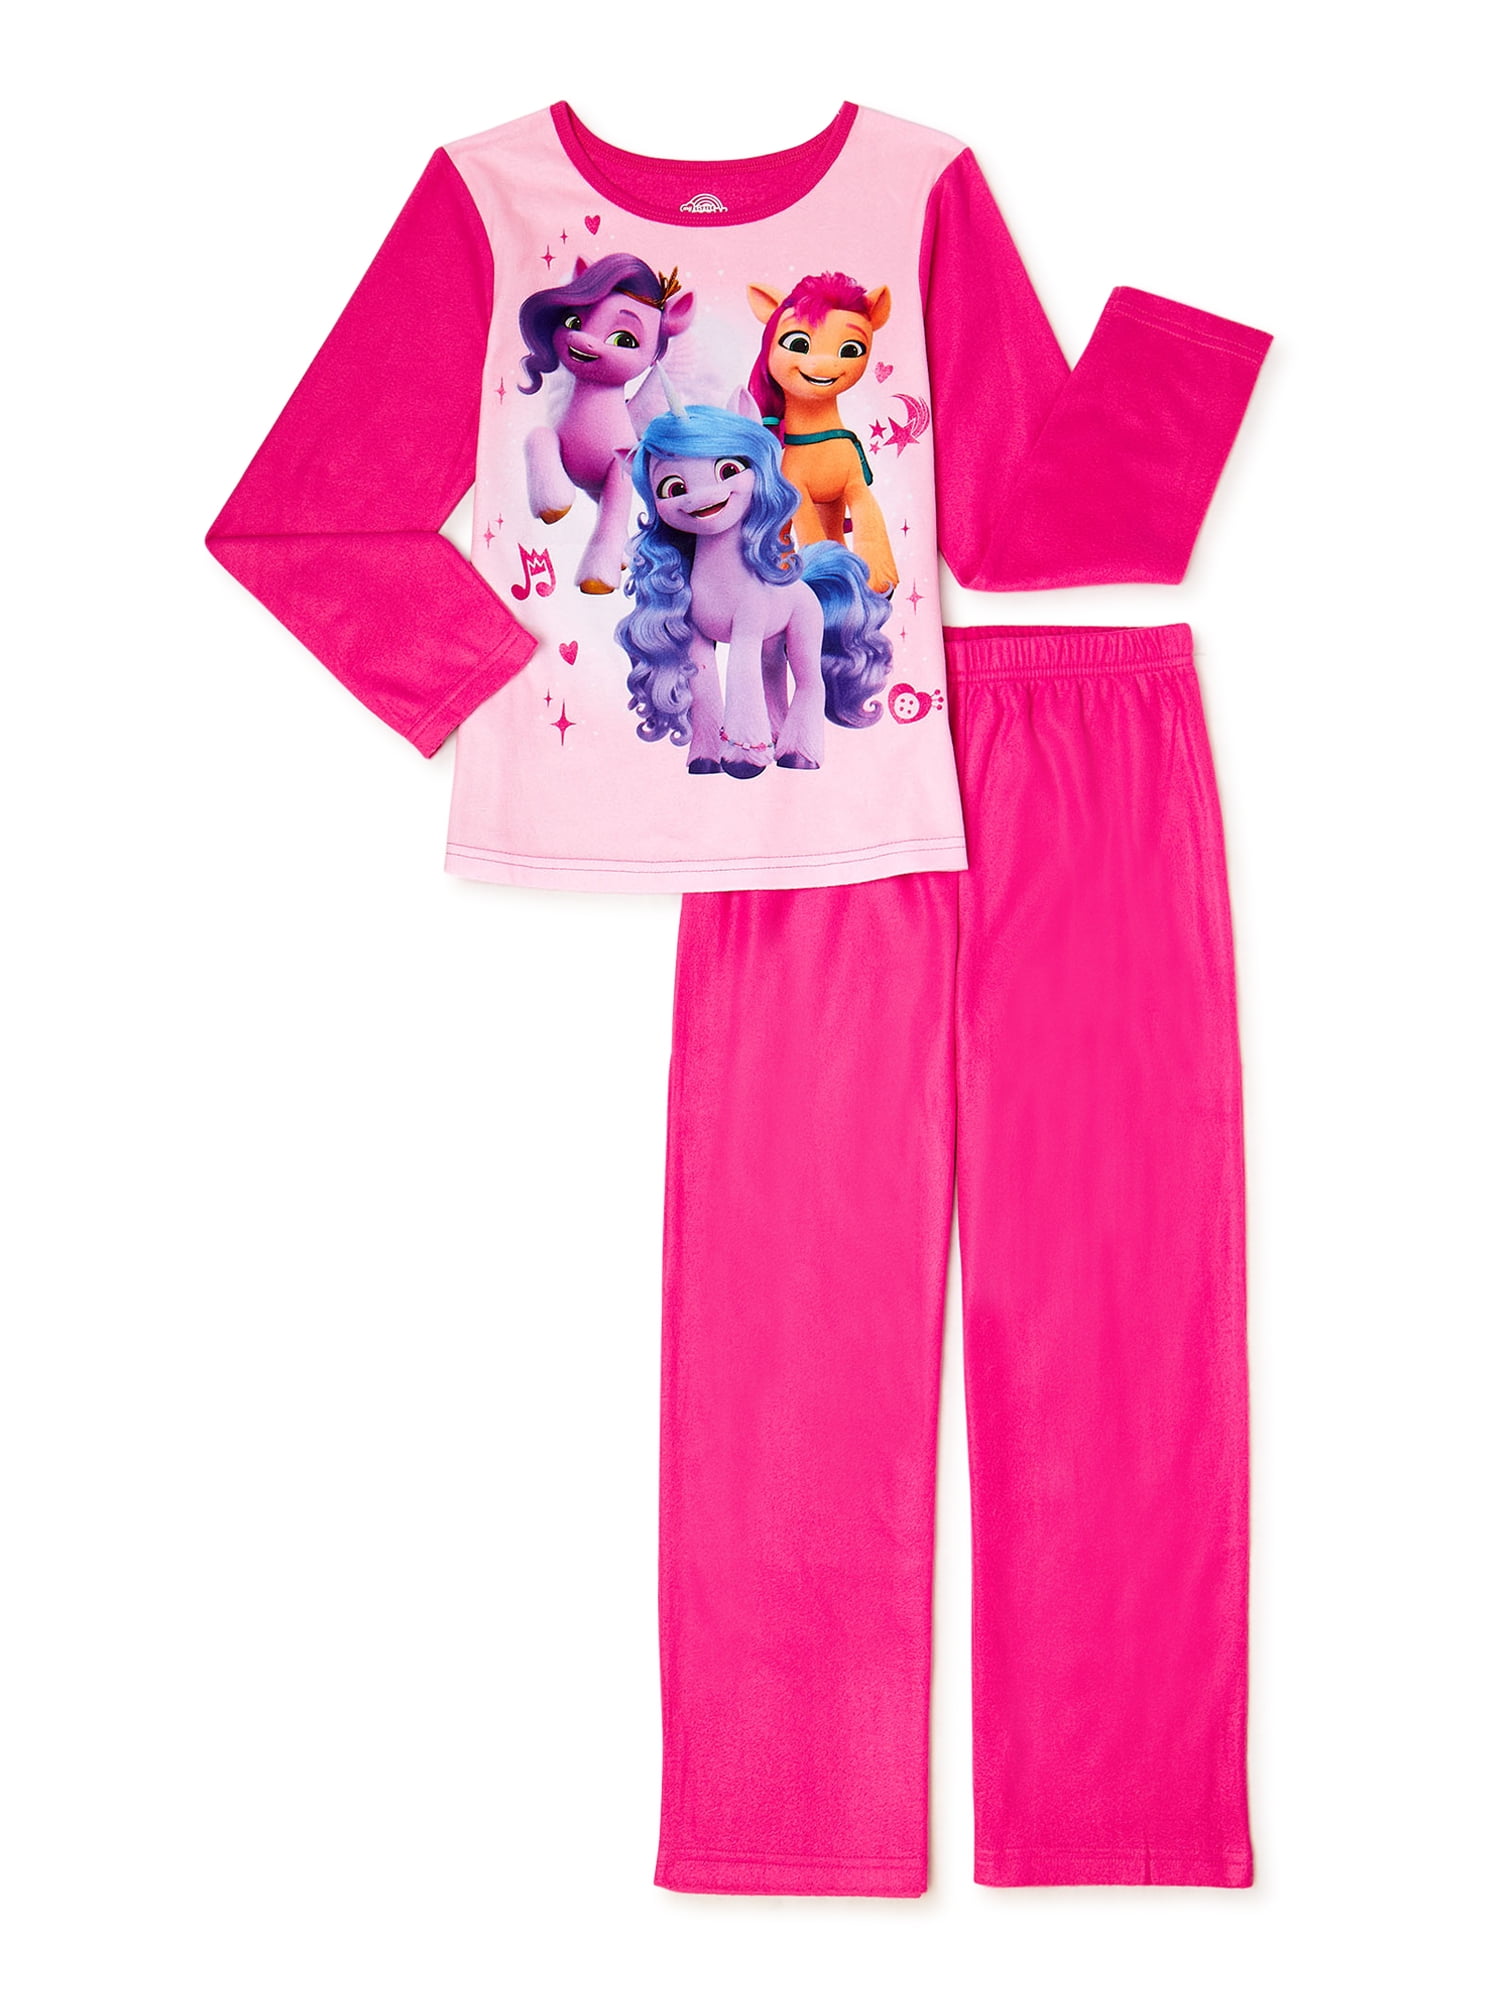 AME My Little Pony Girls Nightgown Short Sleeve Sleepgown Nightshirt